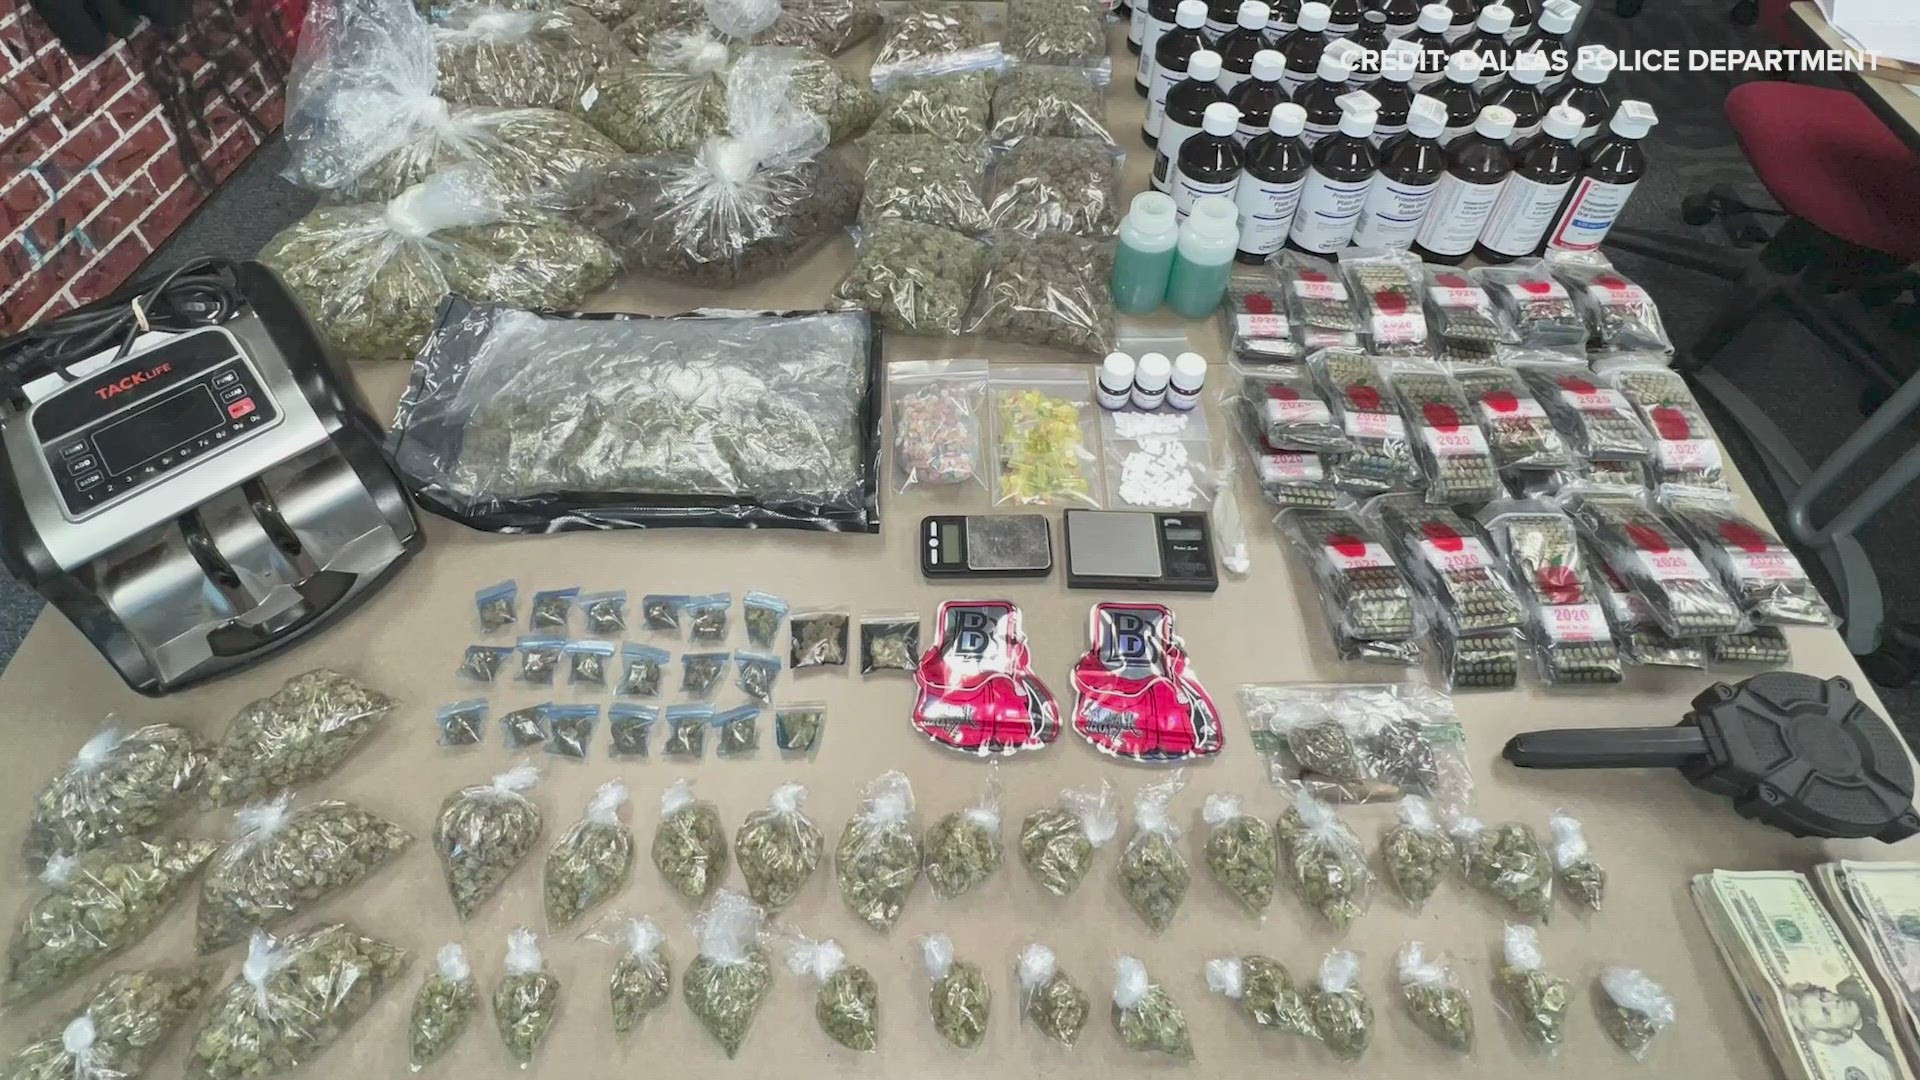 Police seized more than 180 grams of Methamphetamine, nearly 5 kilos of marijuana, along with alprazolam, promethazine and cash.